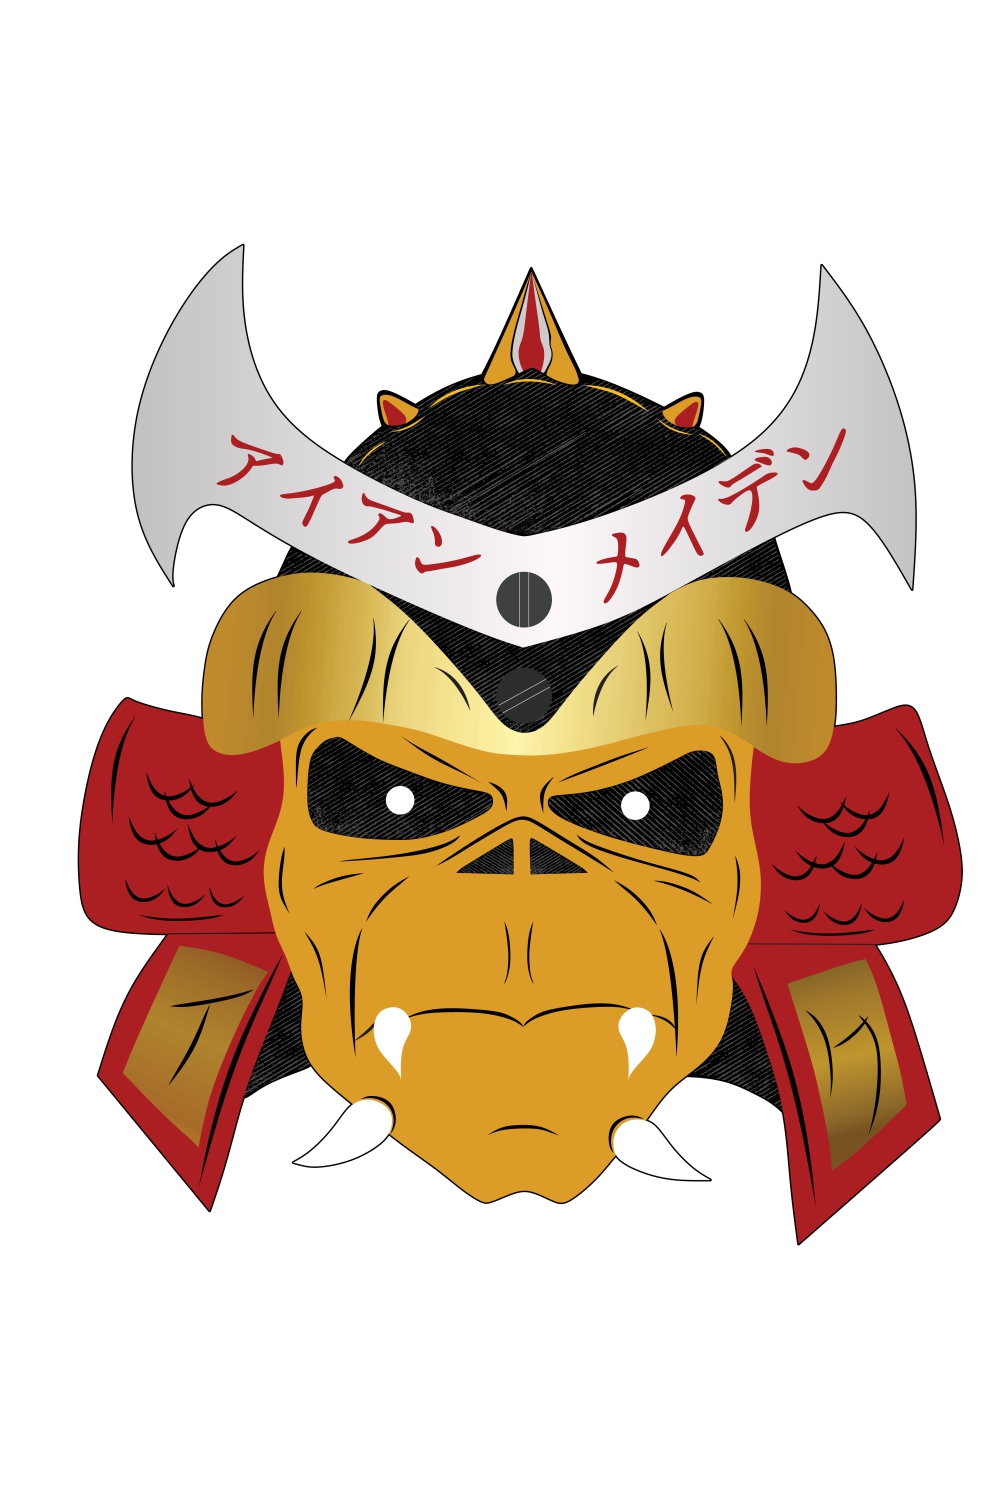 Japanese Samurai Mask pinterest preview image.